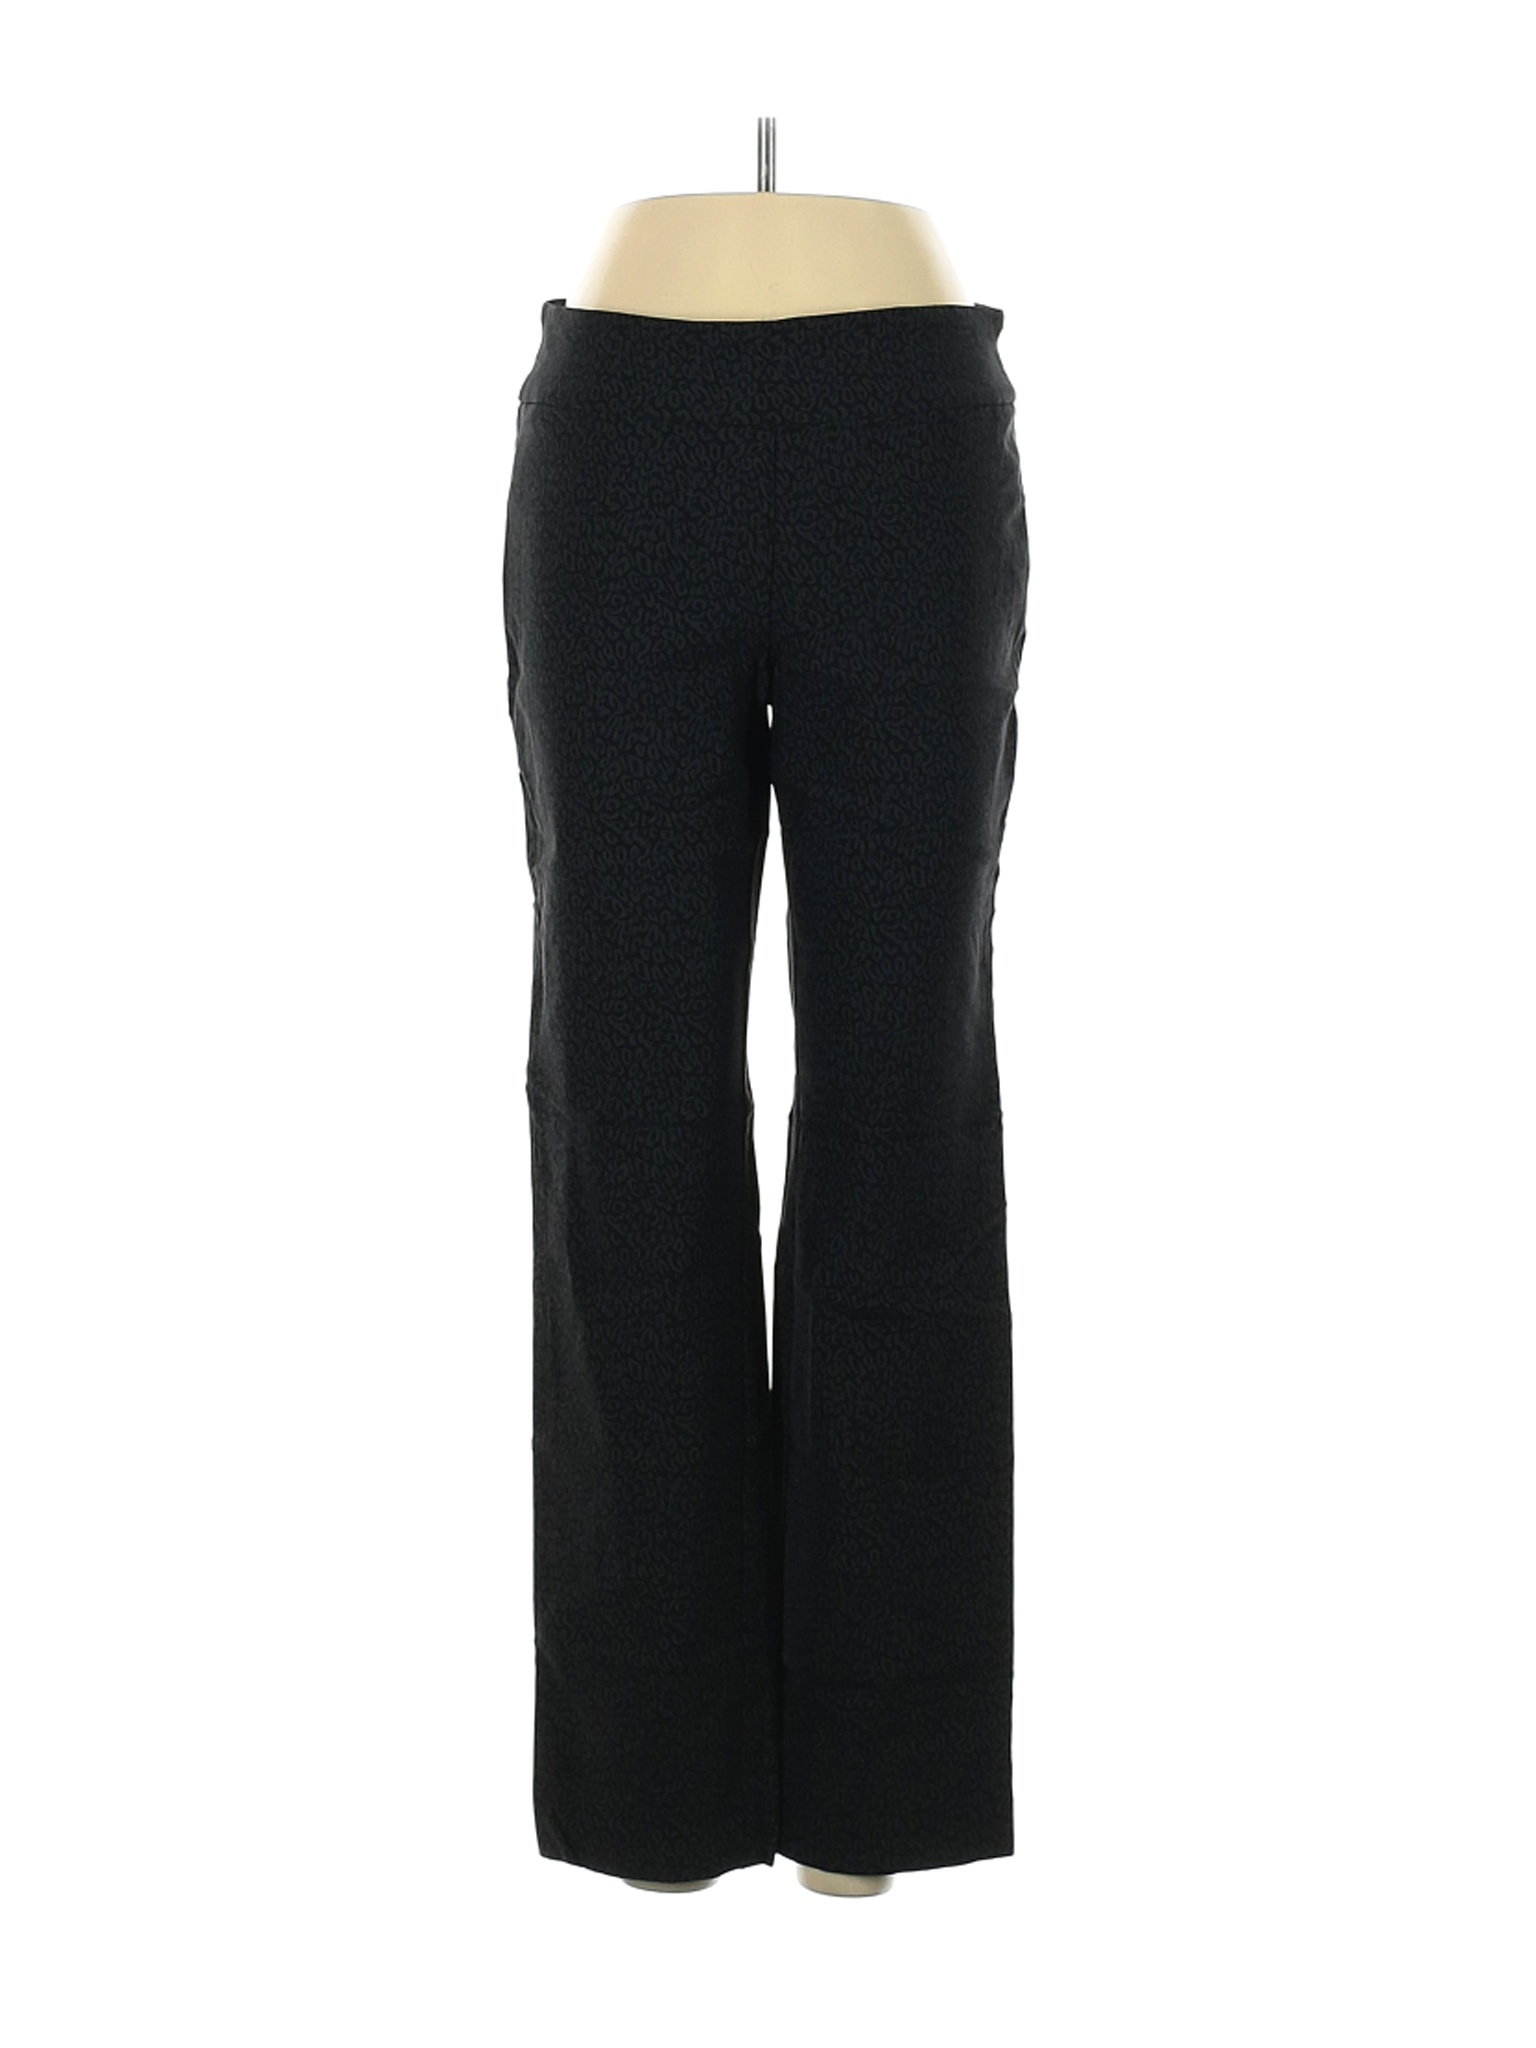 Dana Buchman Women Black Dress Pants S | eBay